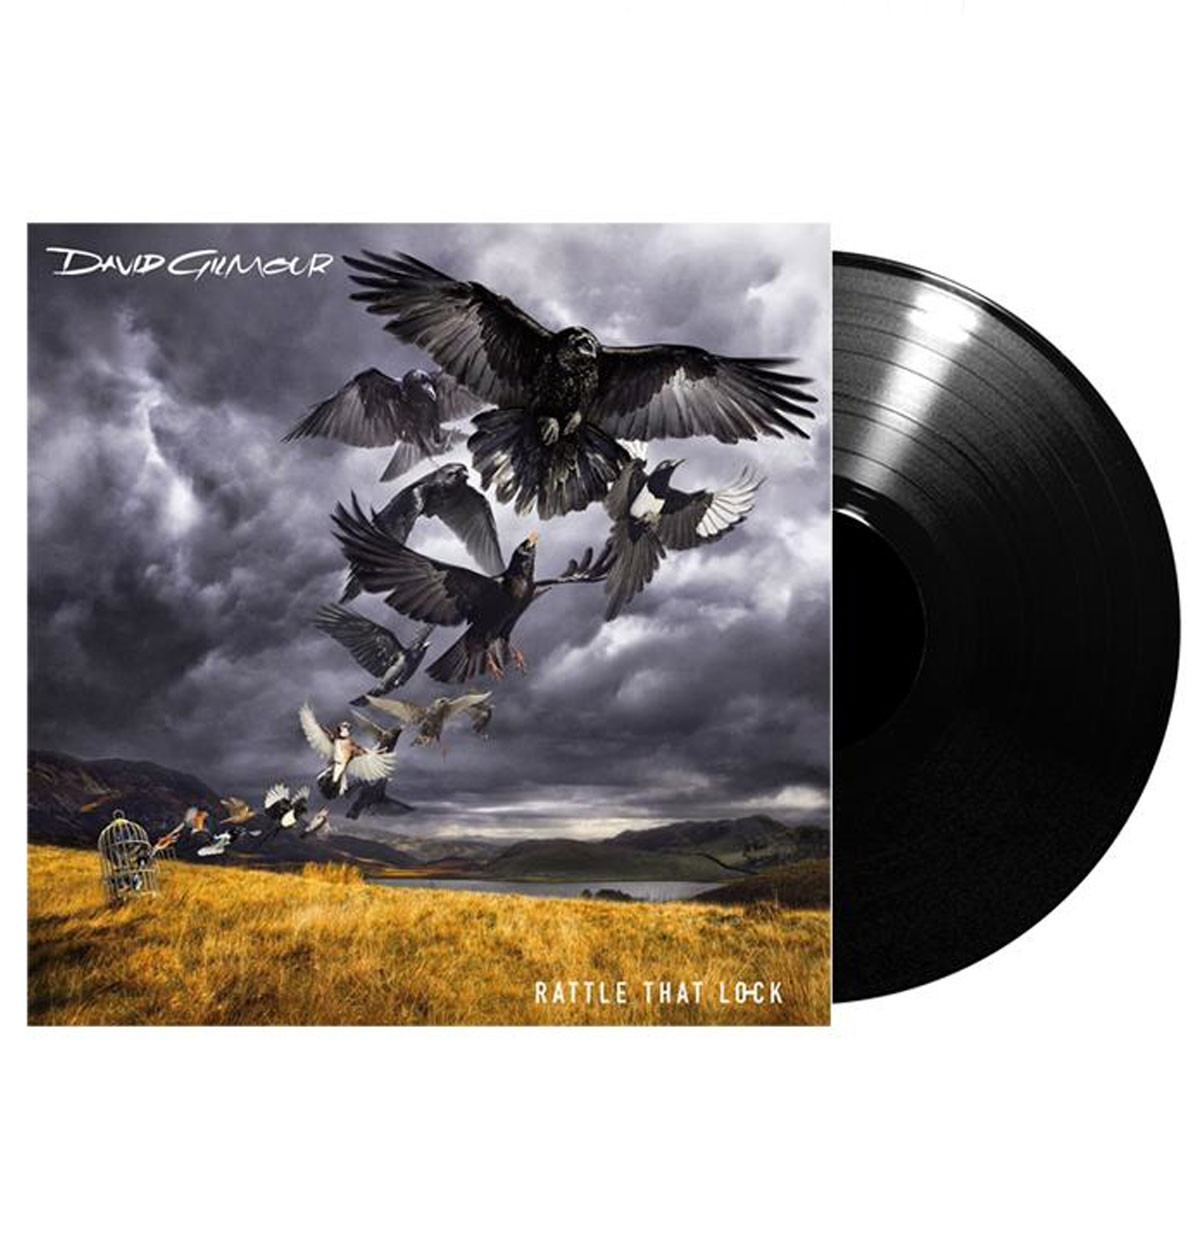 David Gilmour - Rattle That Lock LP